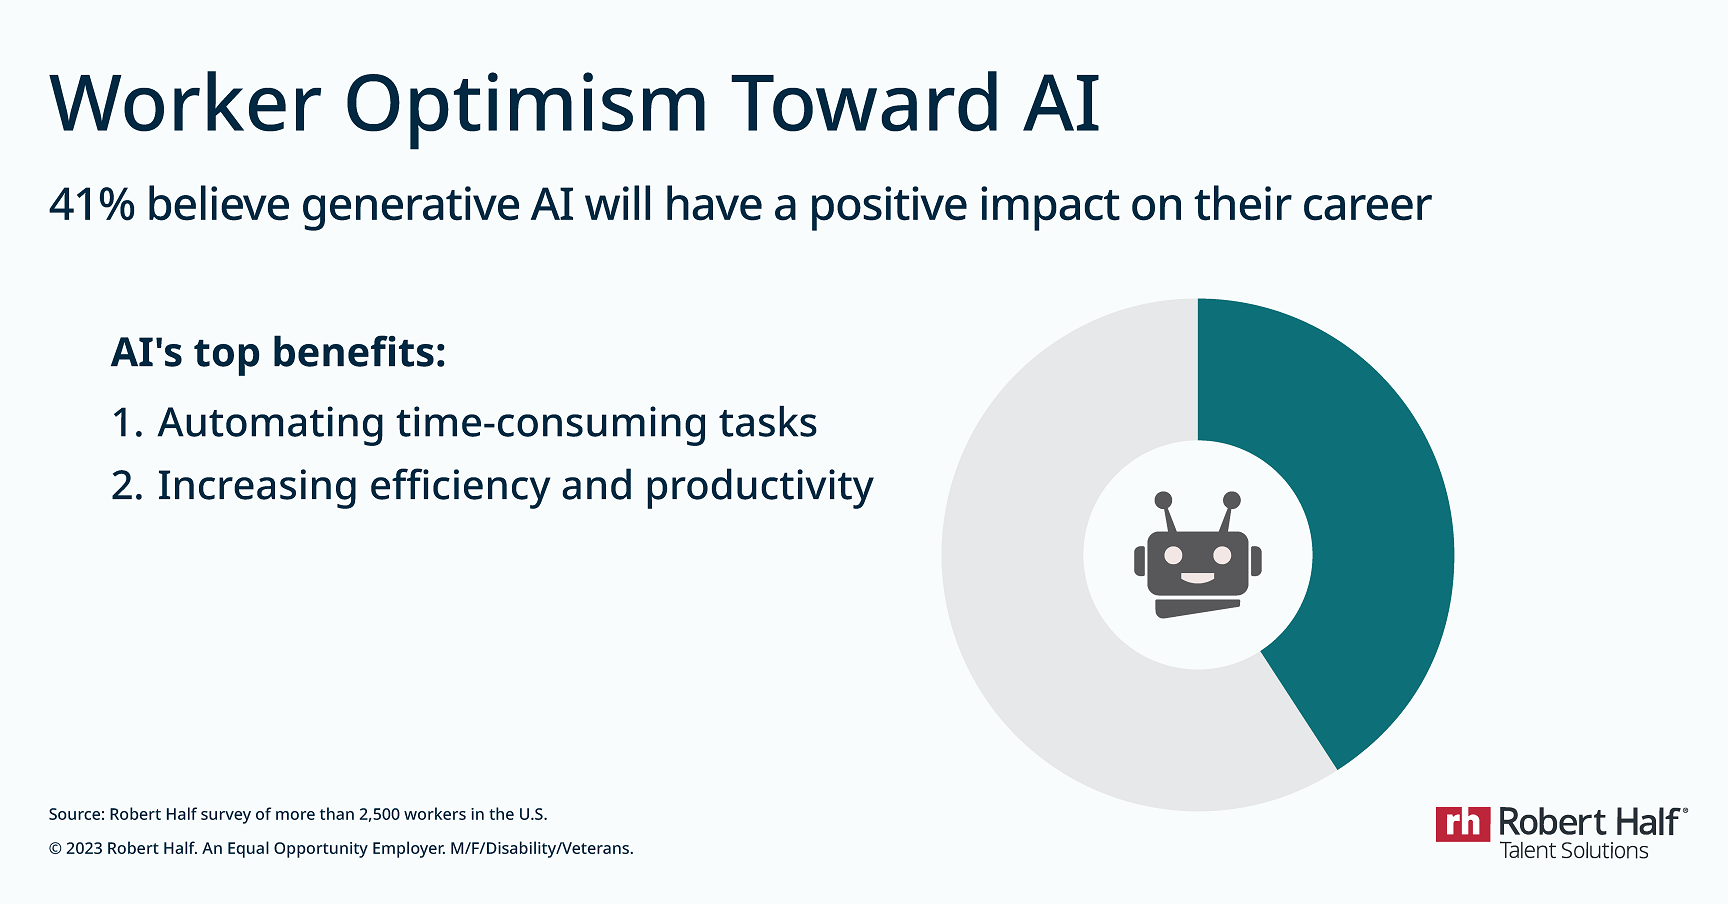 Worker Optimism Toward AI